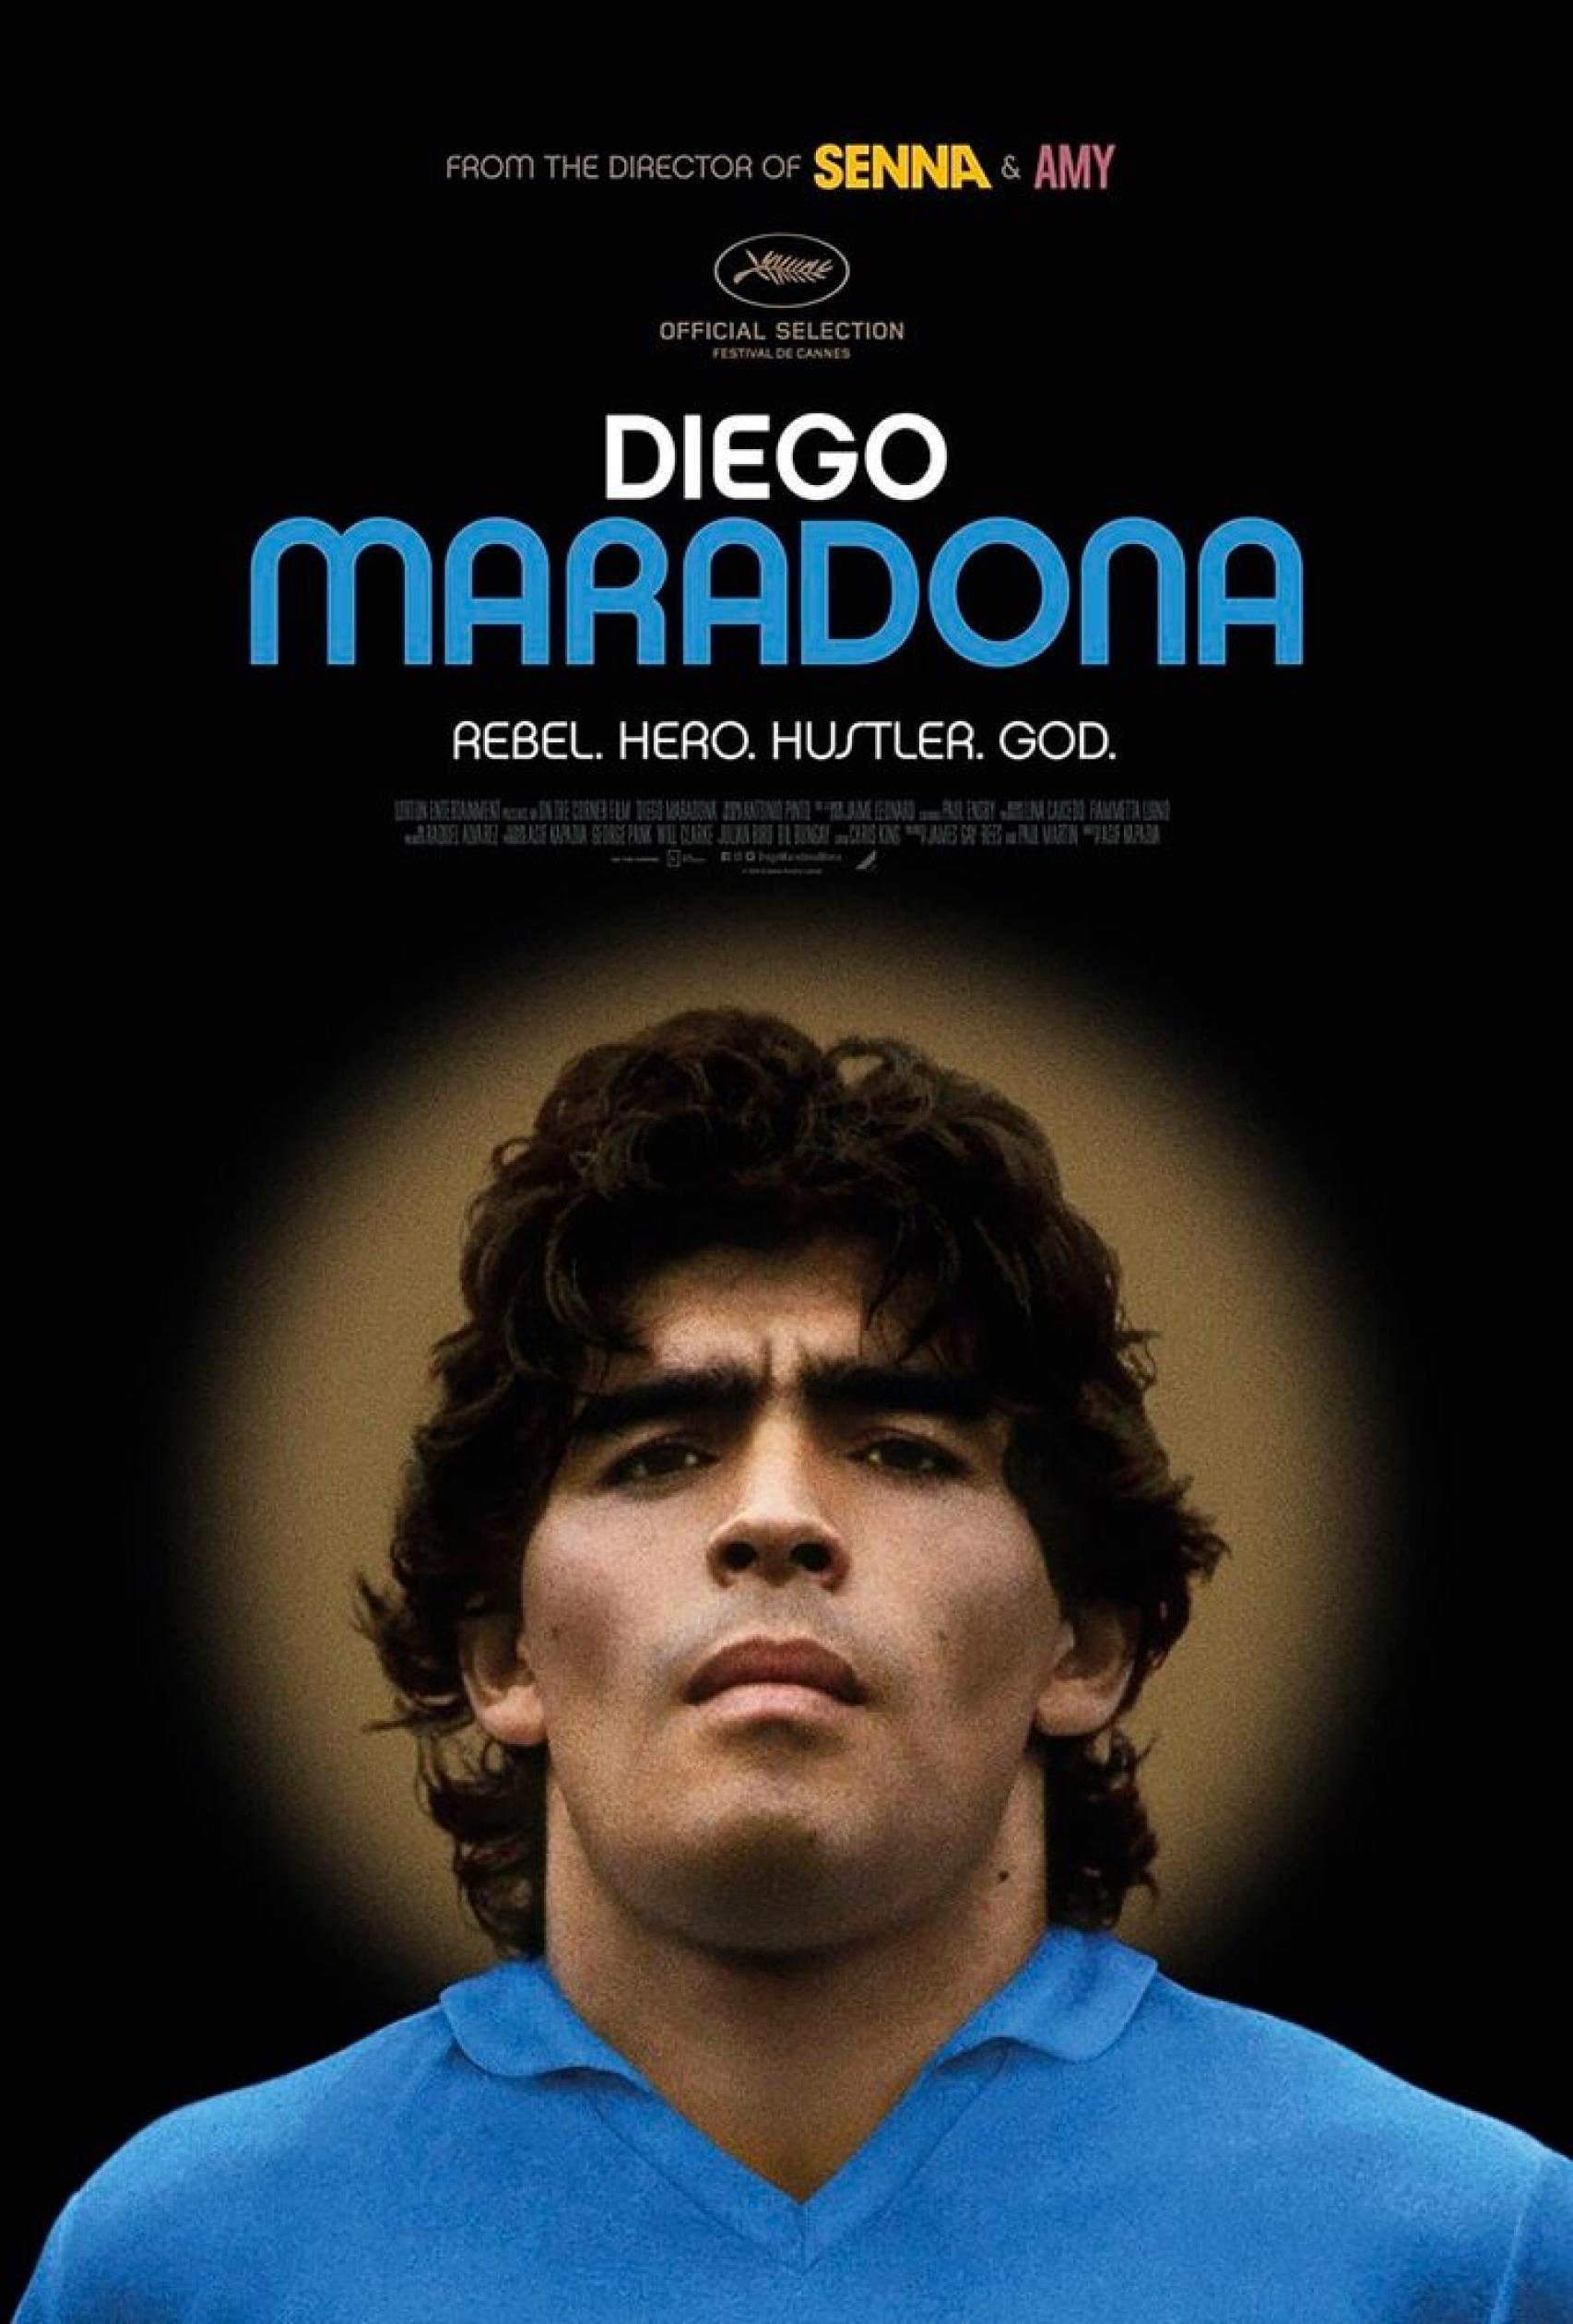 El documental 'Diego Maradona', dirigido por Asif Kapadia